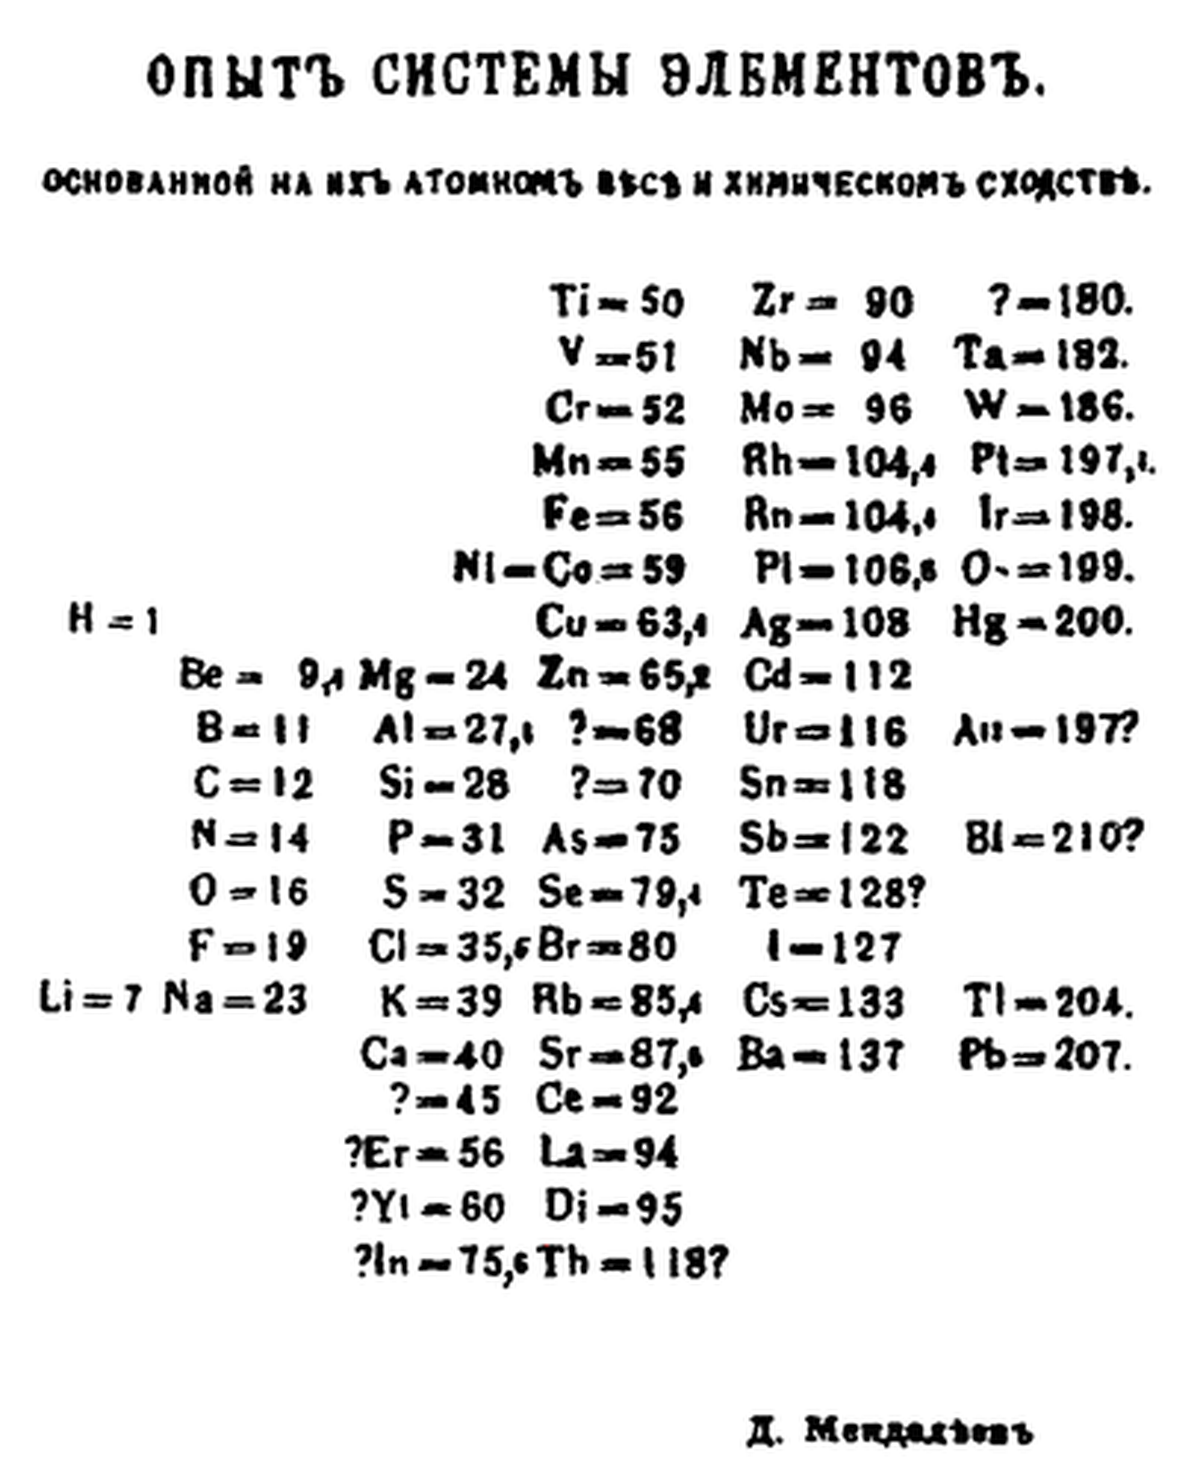 Mendelejevi algne perioodilisustabel.